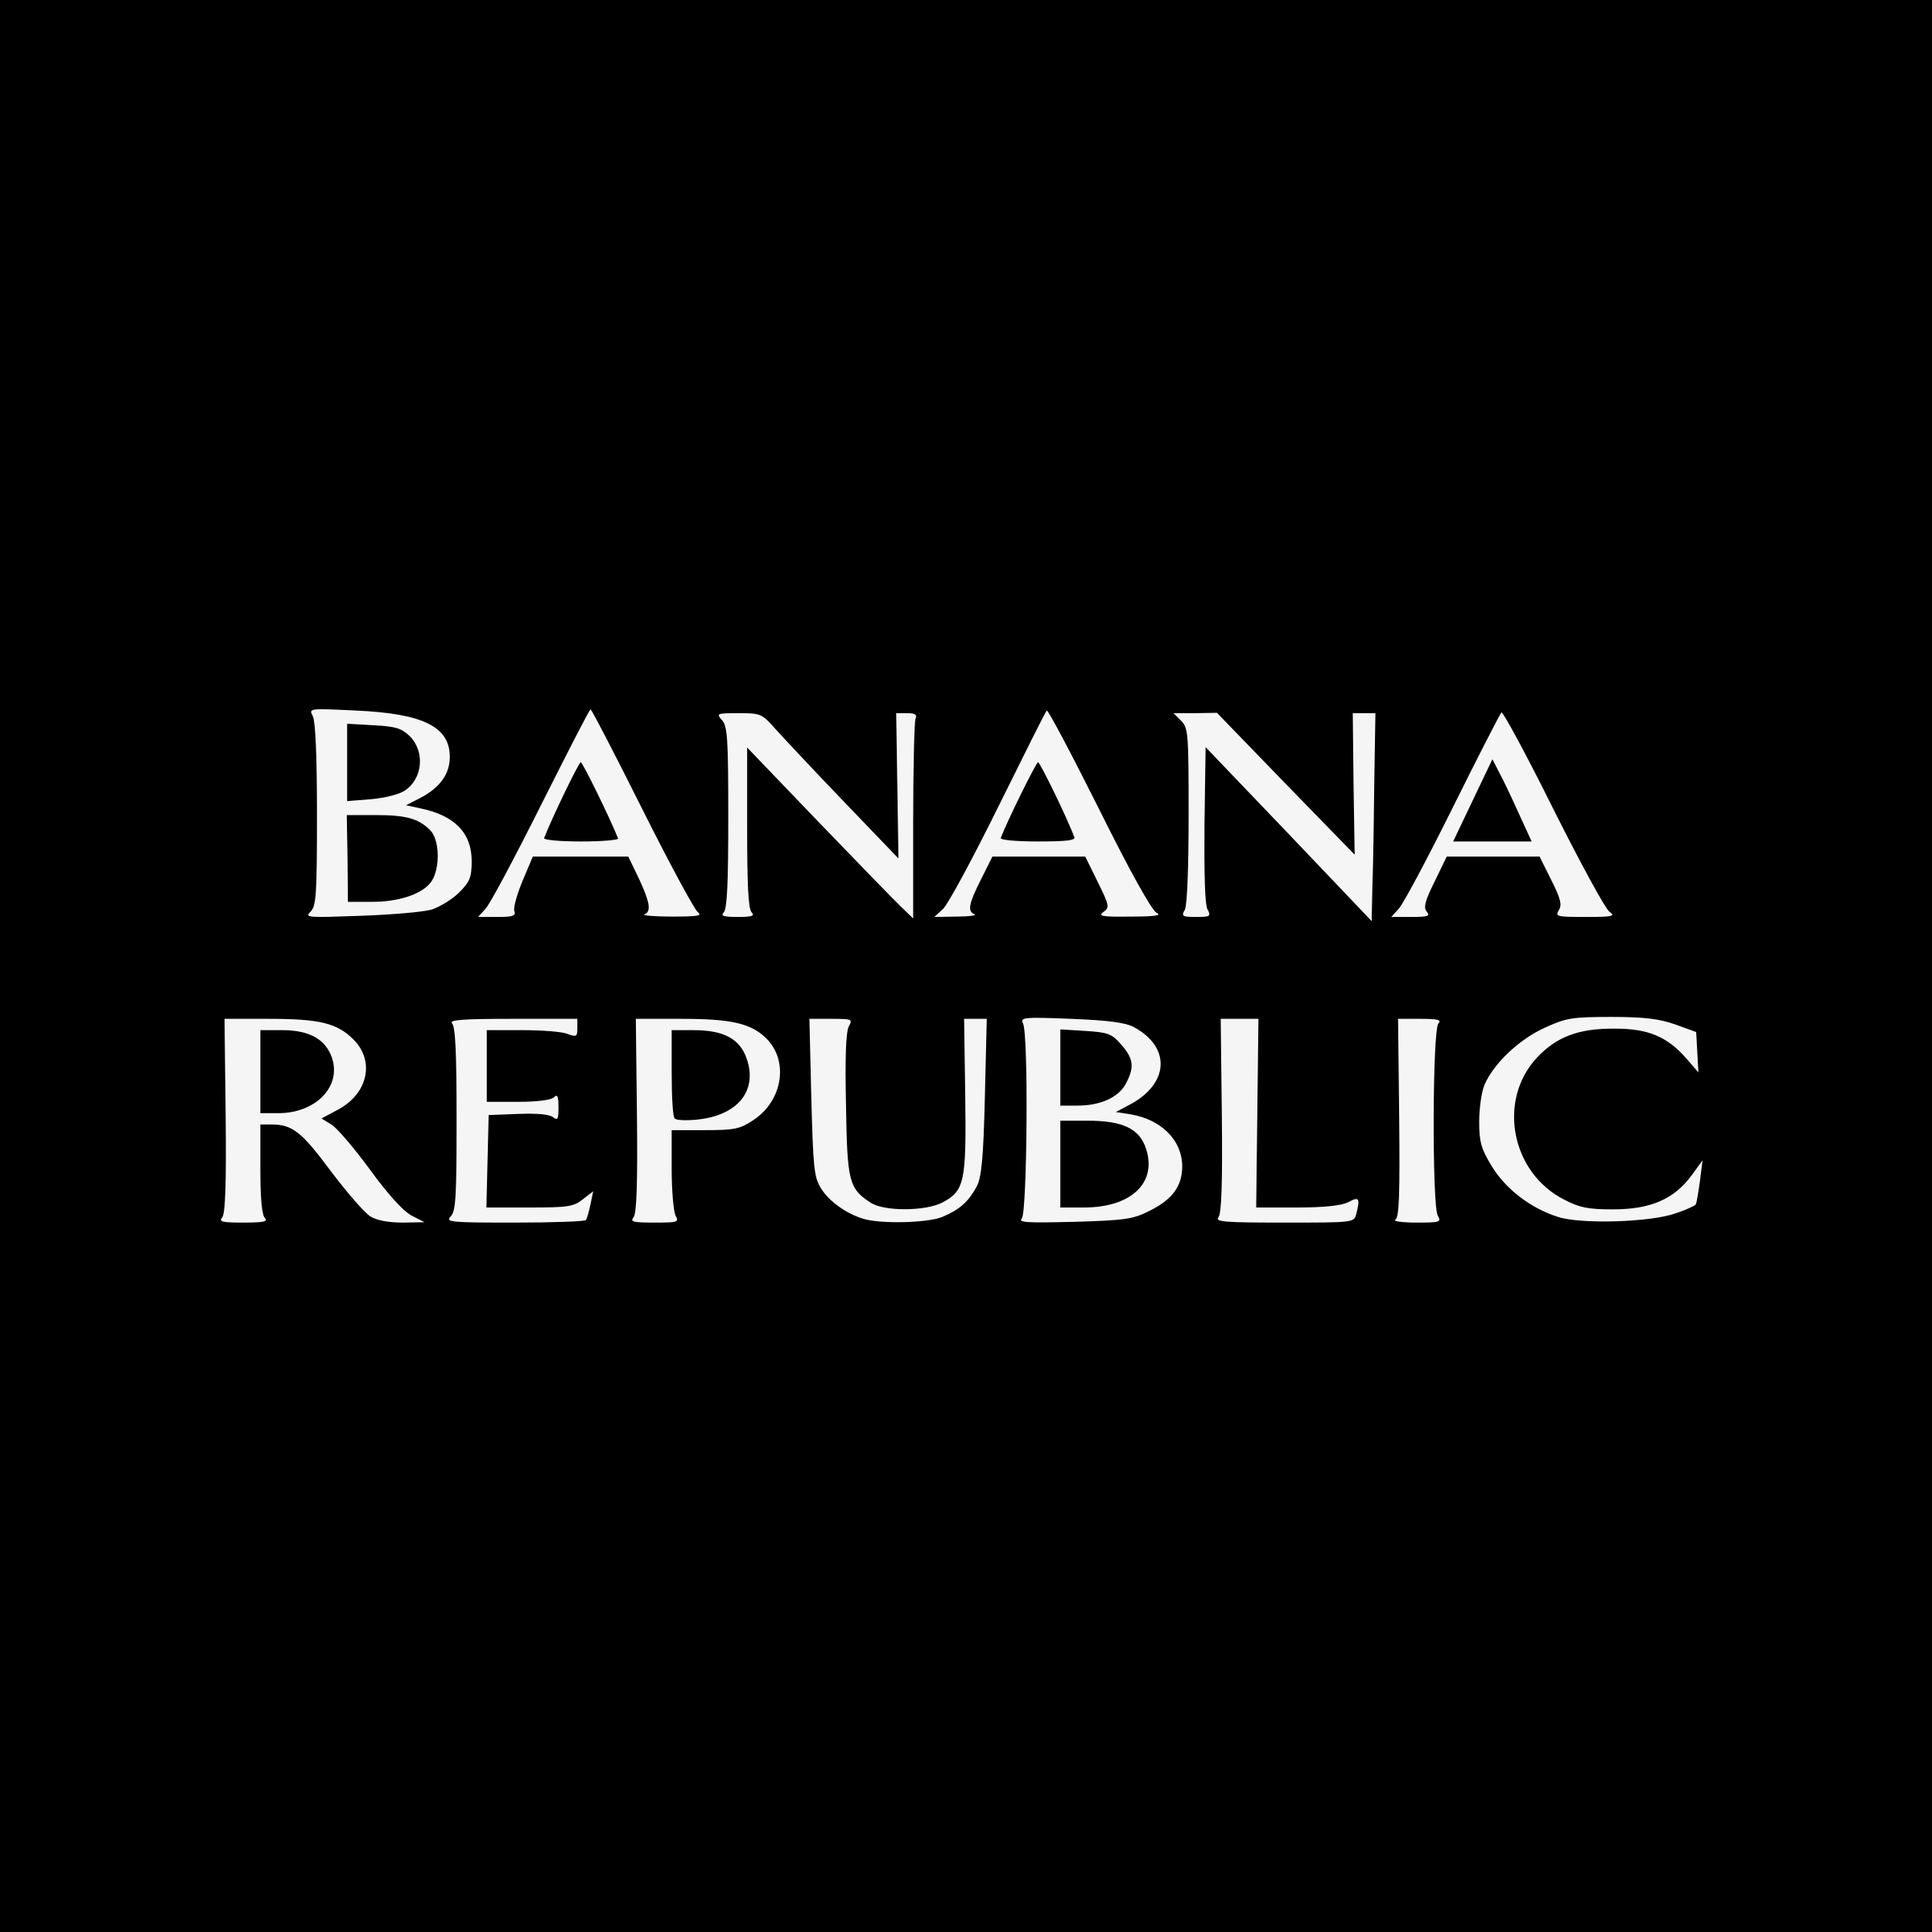 Banana Republic Logo - Banana Republic Logo PNG Transparent & SVG Vector - Freebie Supply